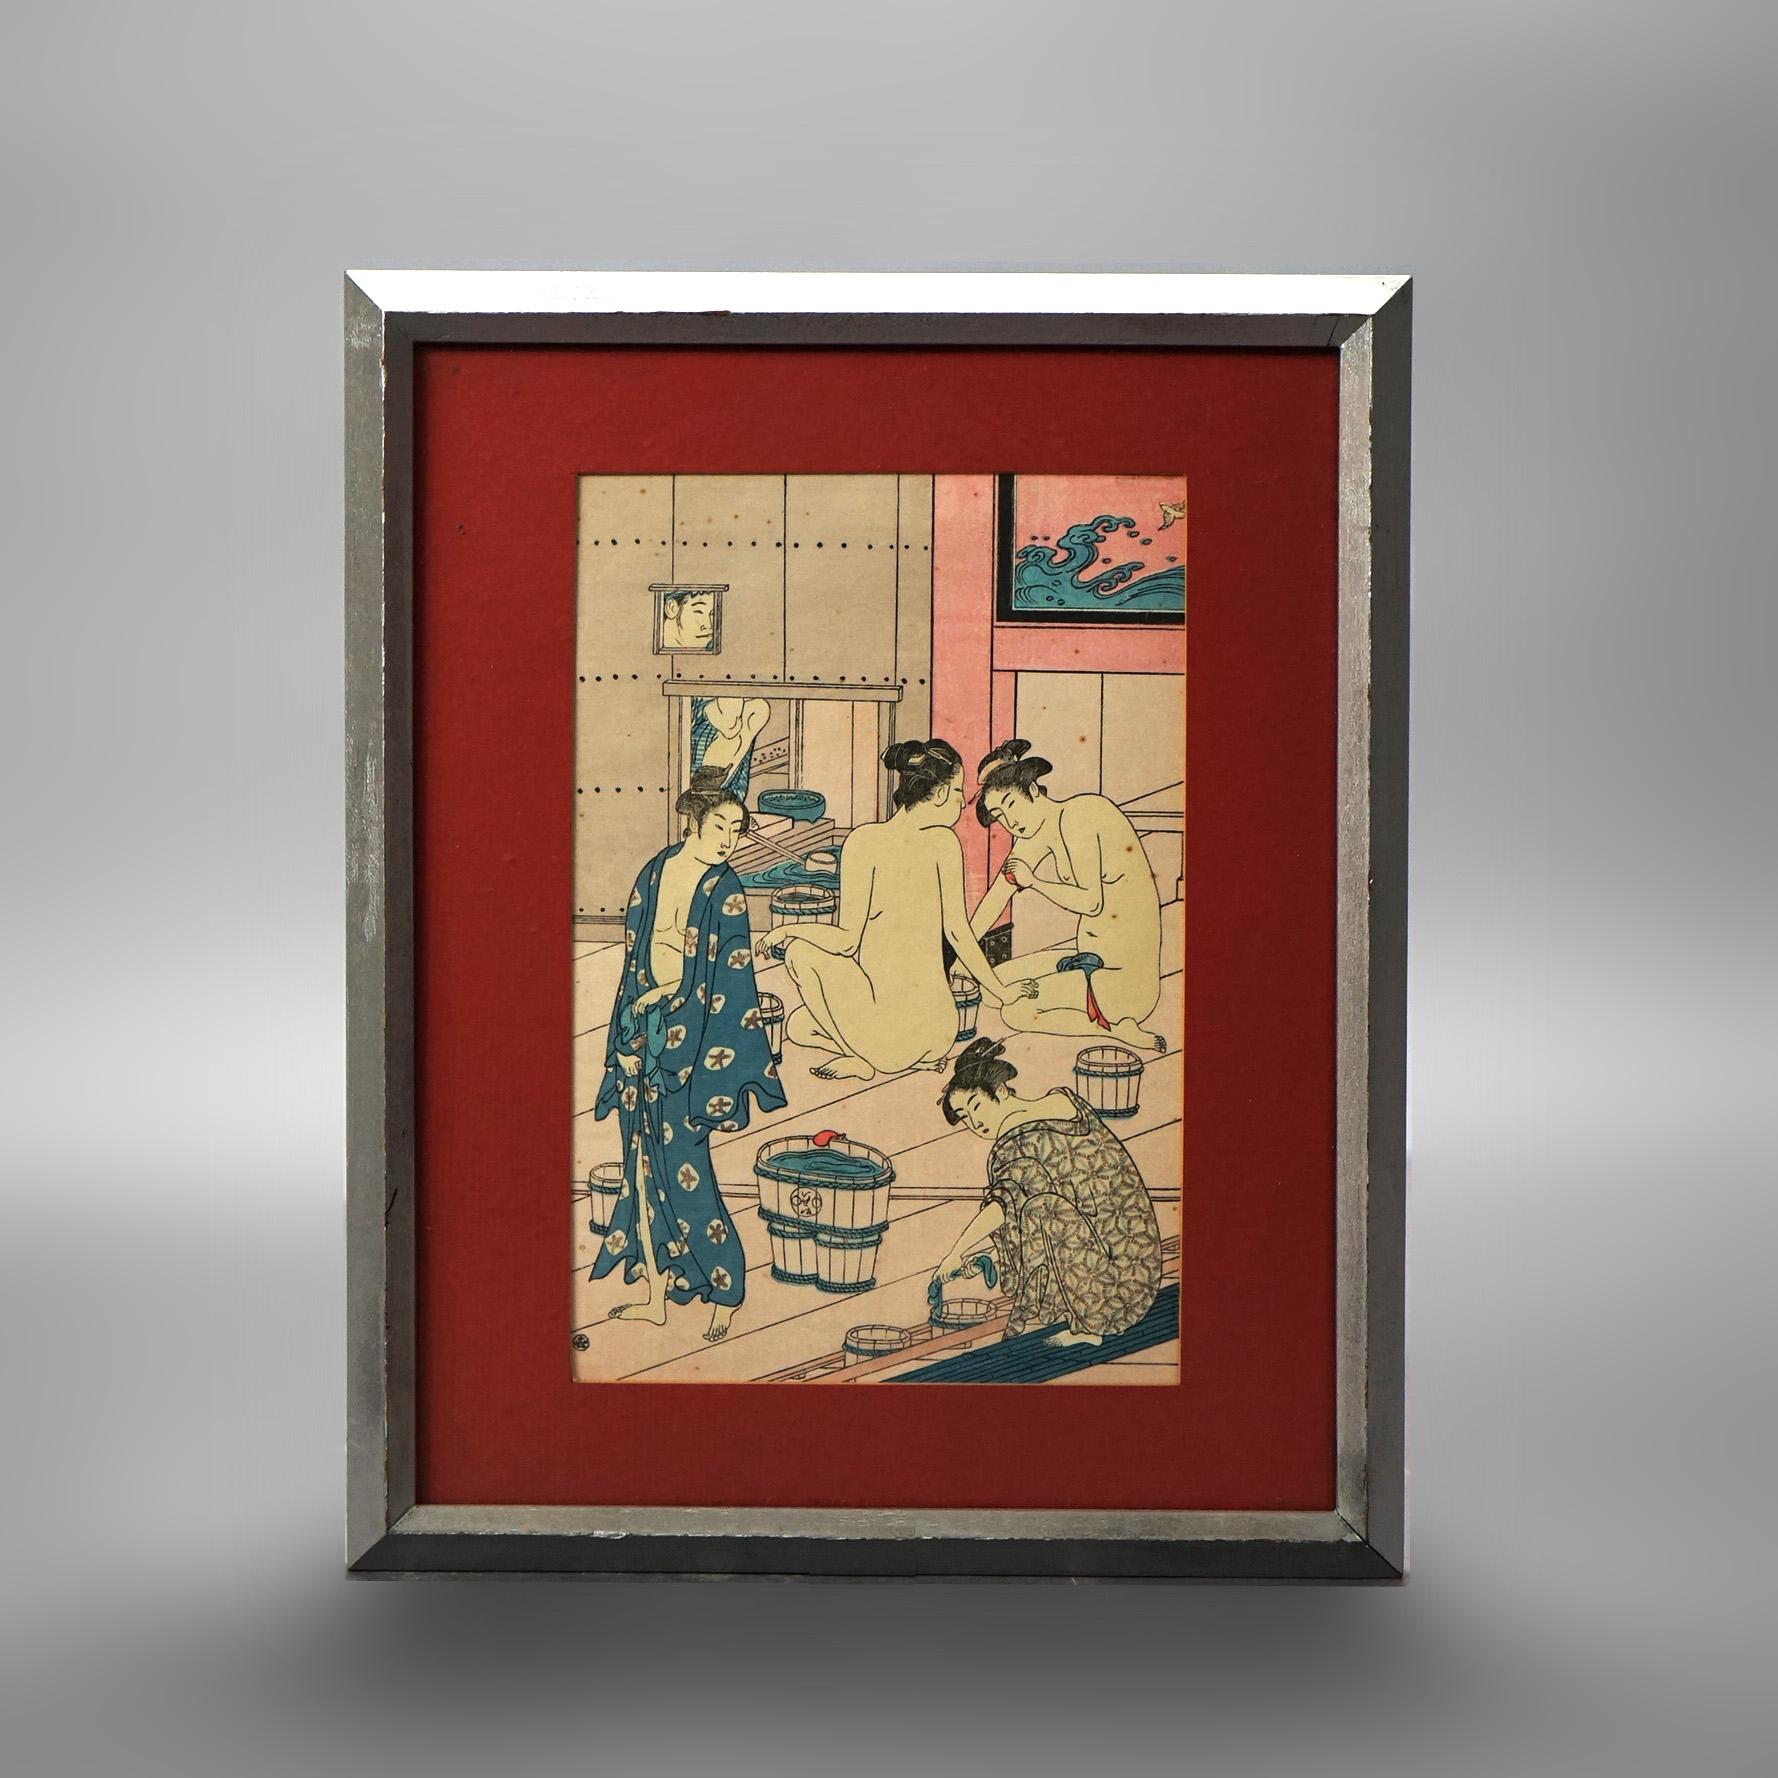 Three Japanese Woodblock Genre Prints by Torii Kiyonaga & Unknown Artist, Framed,  20thC

Measures- Green Tint: 14.25''H x 11.25''W x 1''D; Flute Scene: 17''H x 14''W x 1''D; Bath: 10.25''H x 8.75''W x 1''D